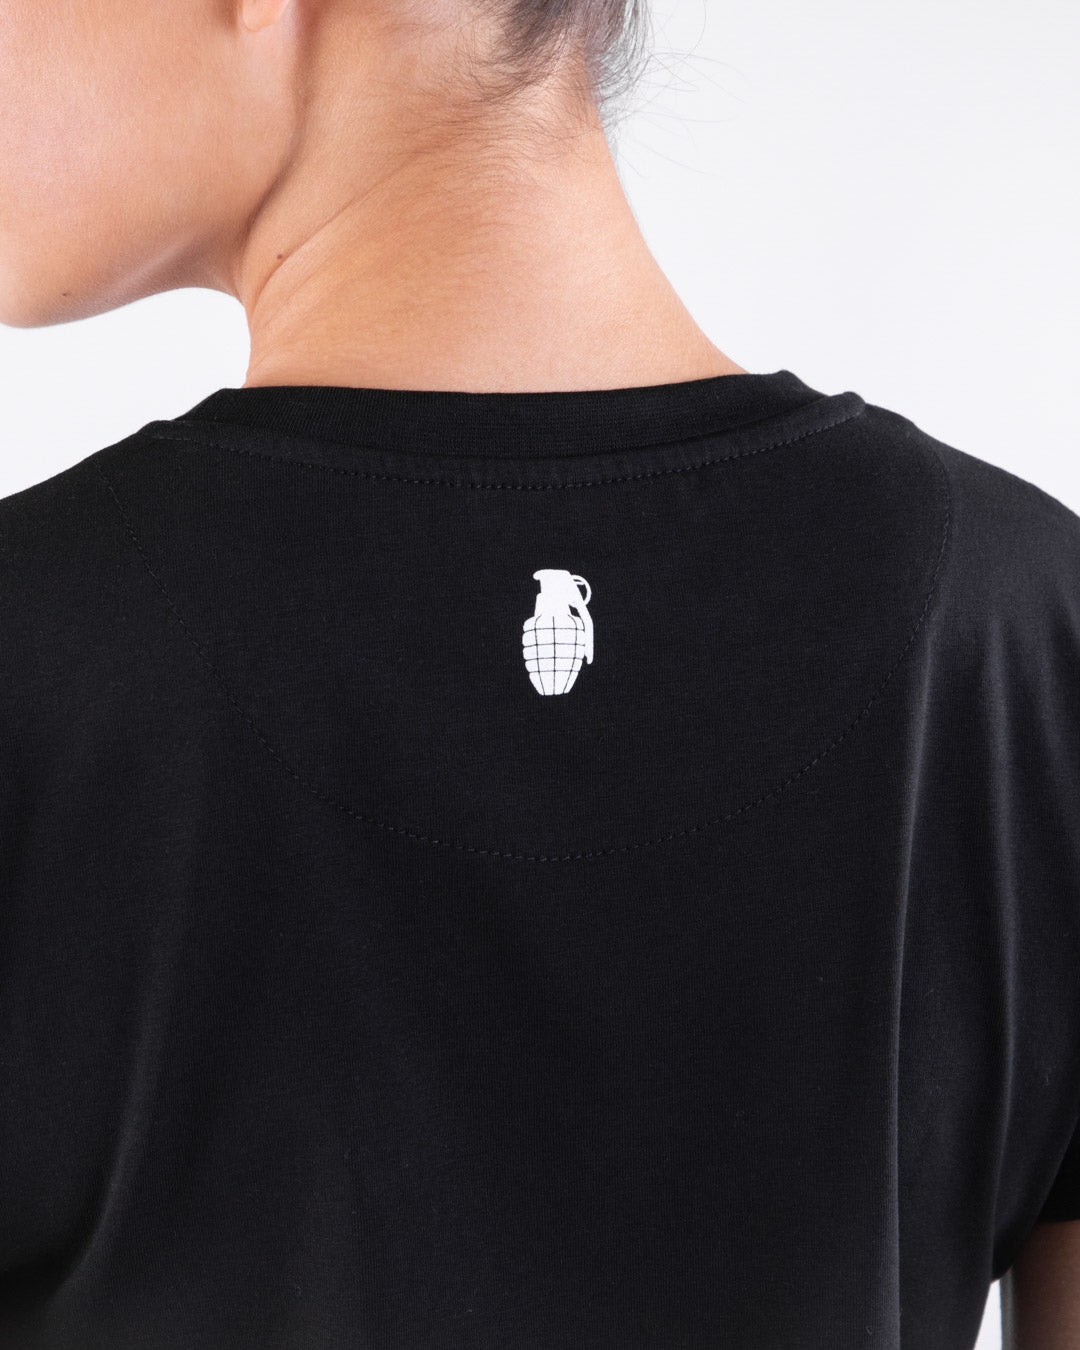 Grenade Womens Core T Shirt Black Close Up Rear